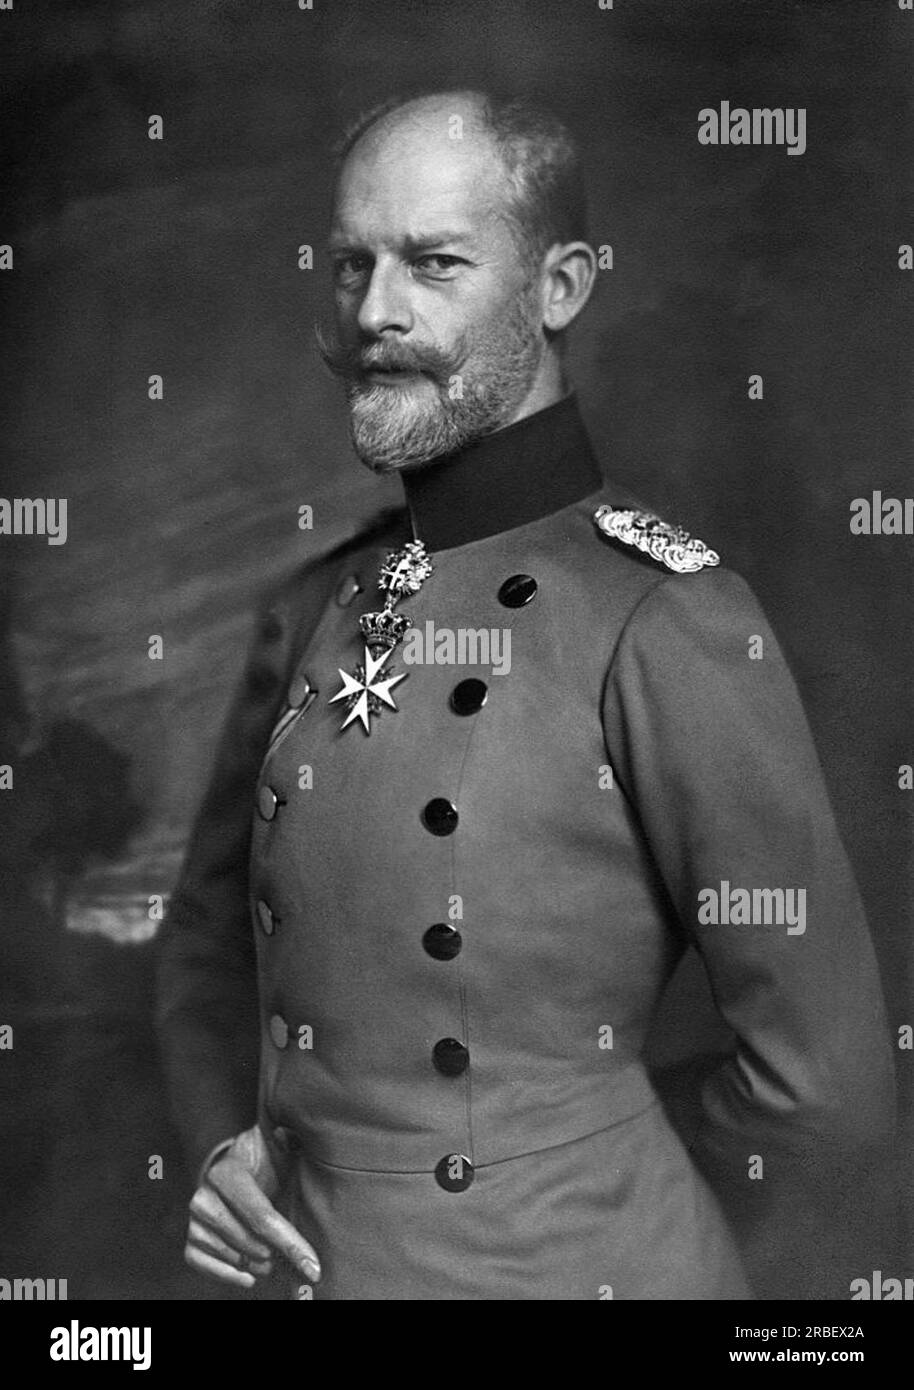 Karl Anton, Prince of Hohenzollern by Nicola Perscheid Stock Photo